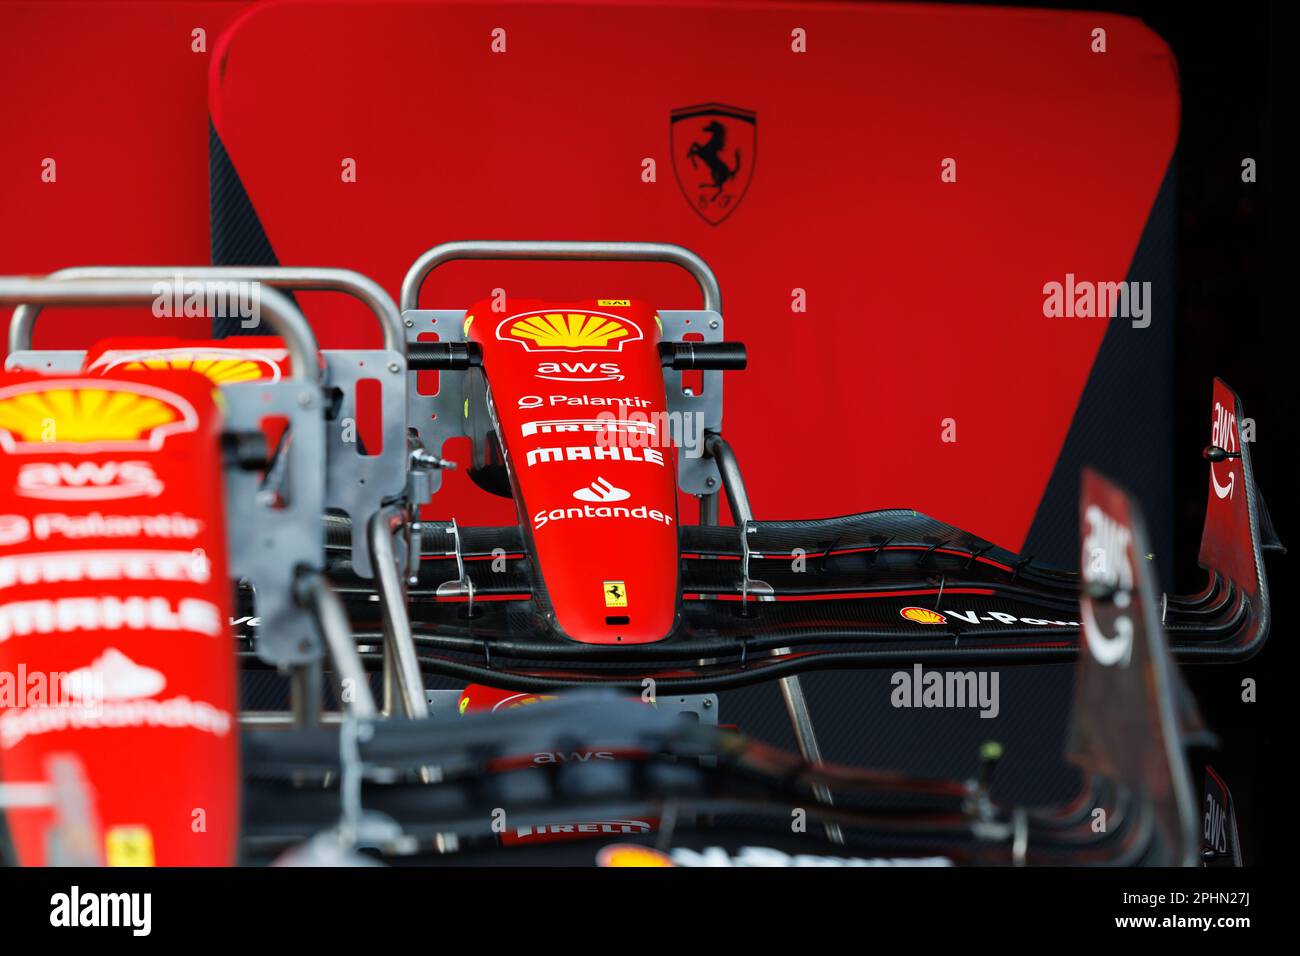 Formula 1 car front garage hi-res stock photography and images